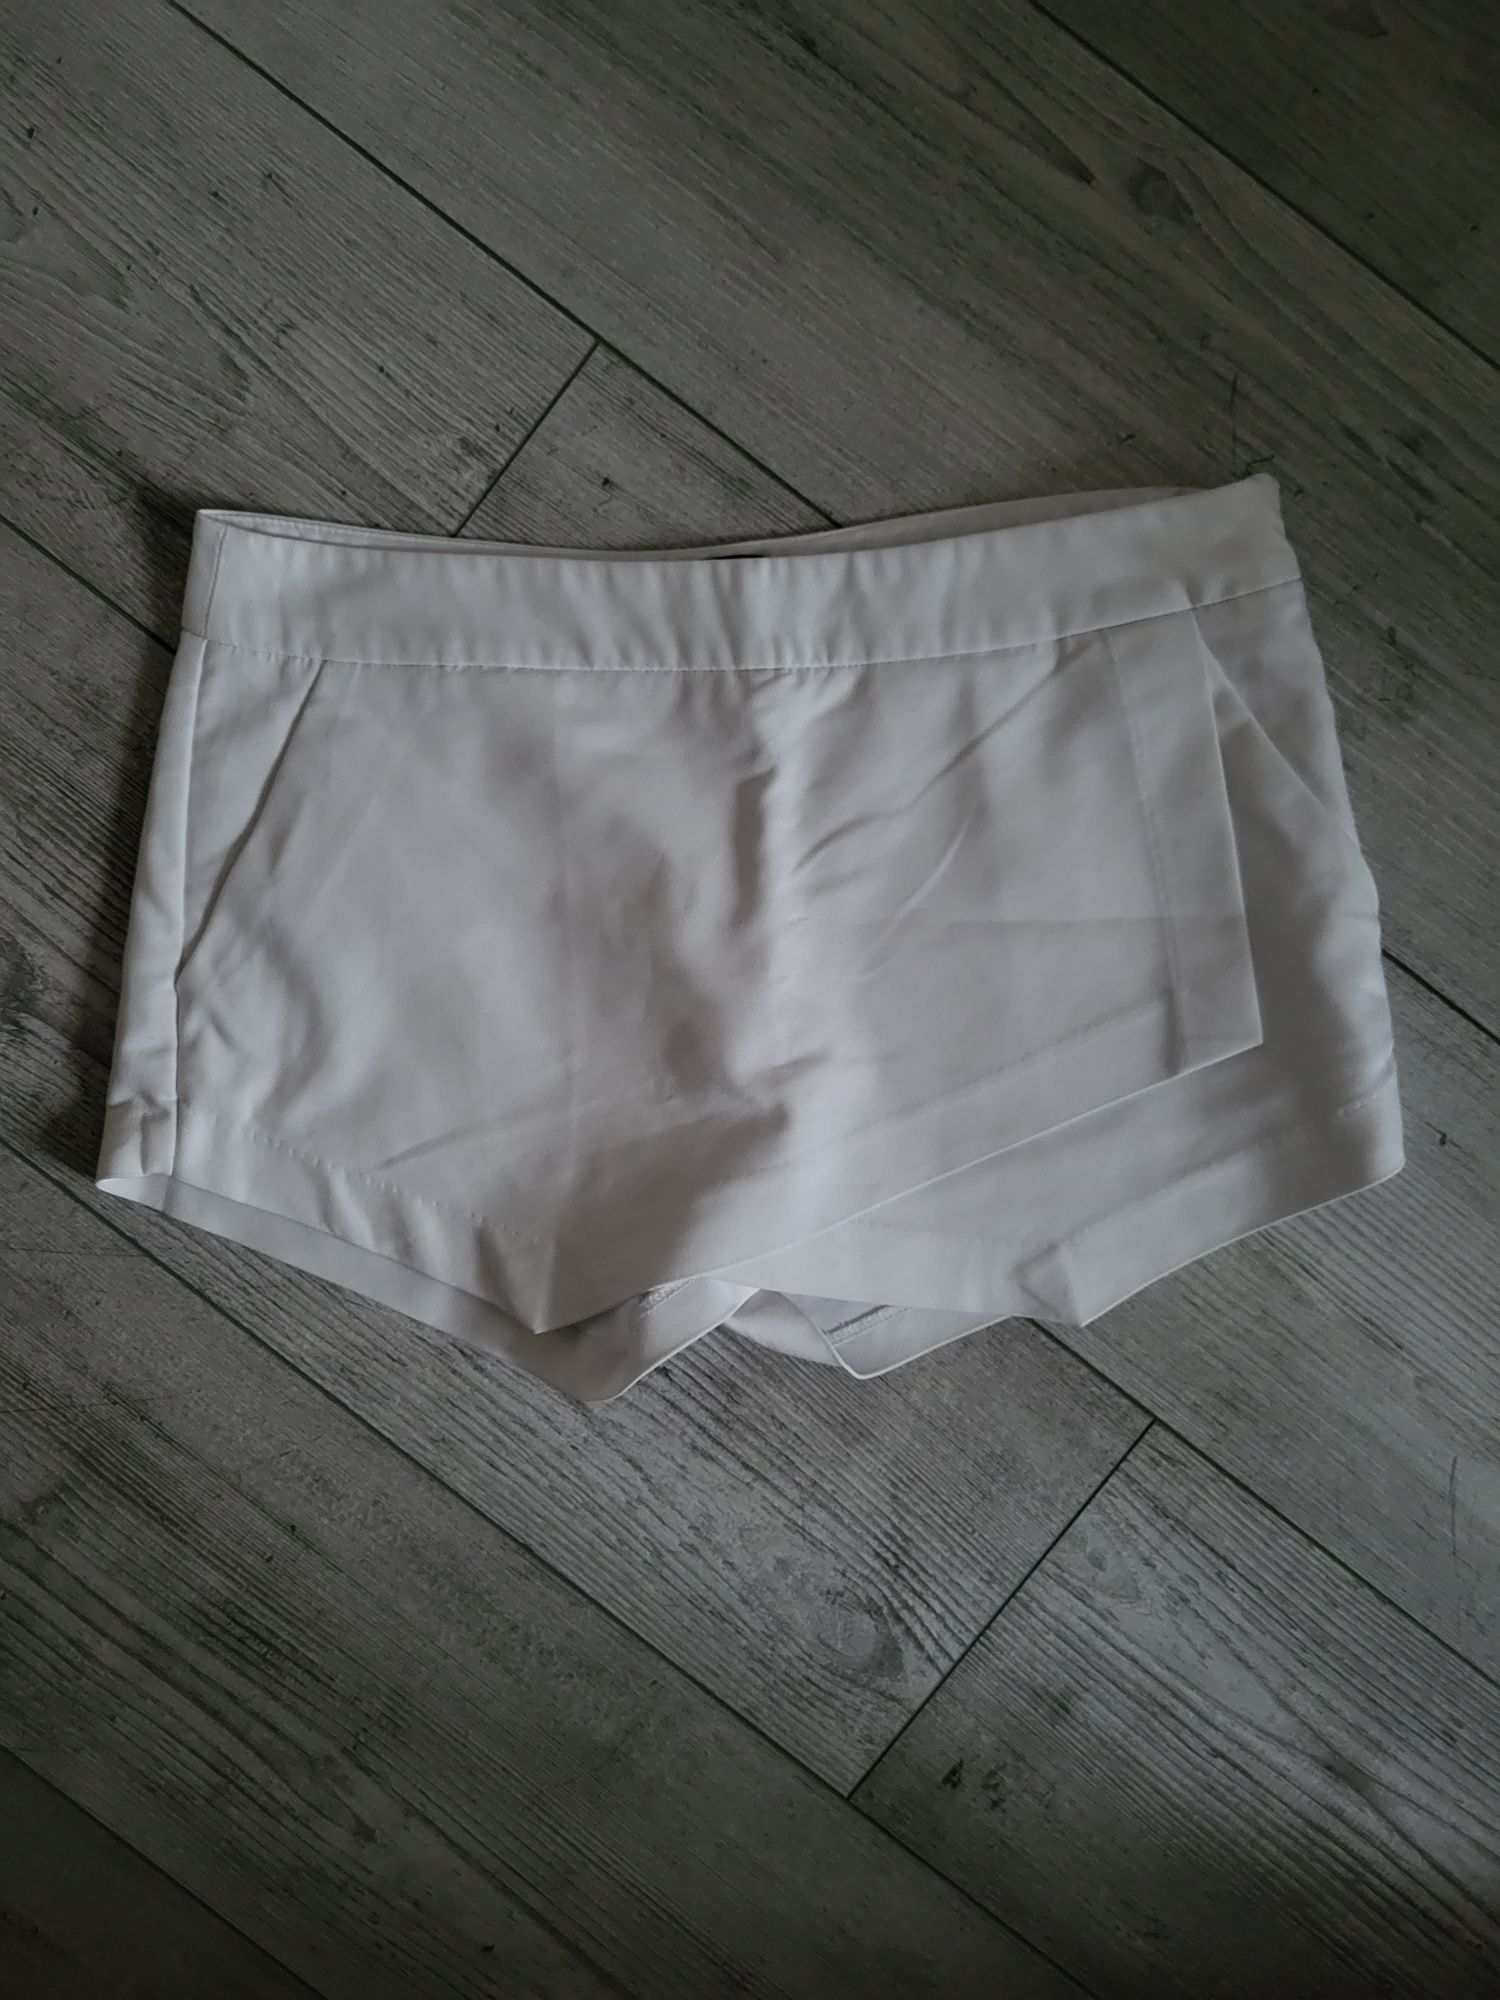 Spódnico spodenki Mohito rozmiar 38 białe